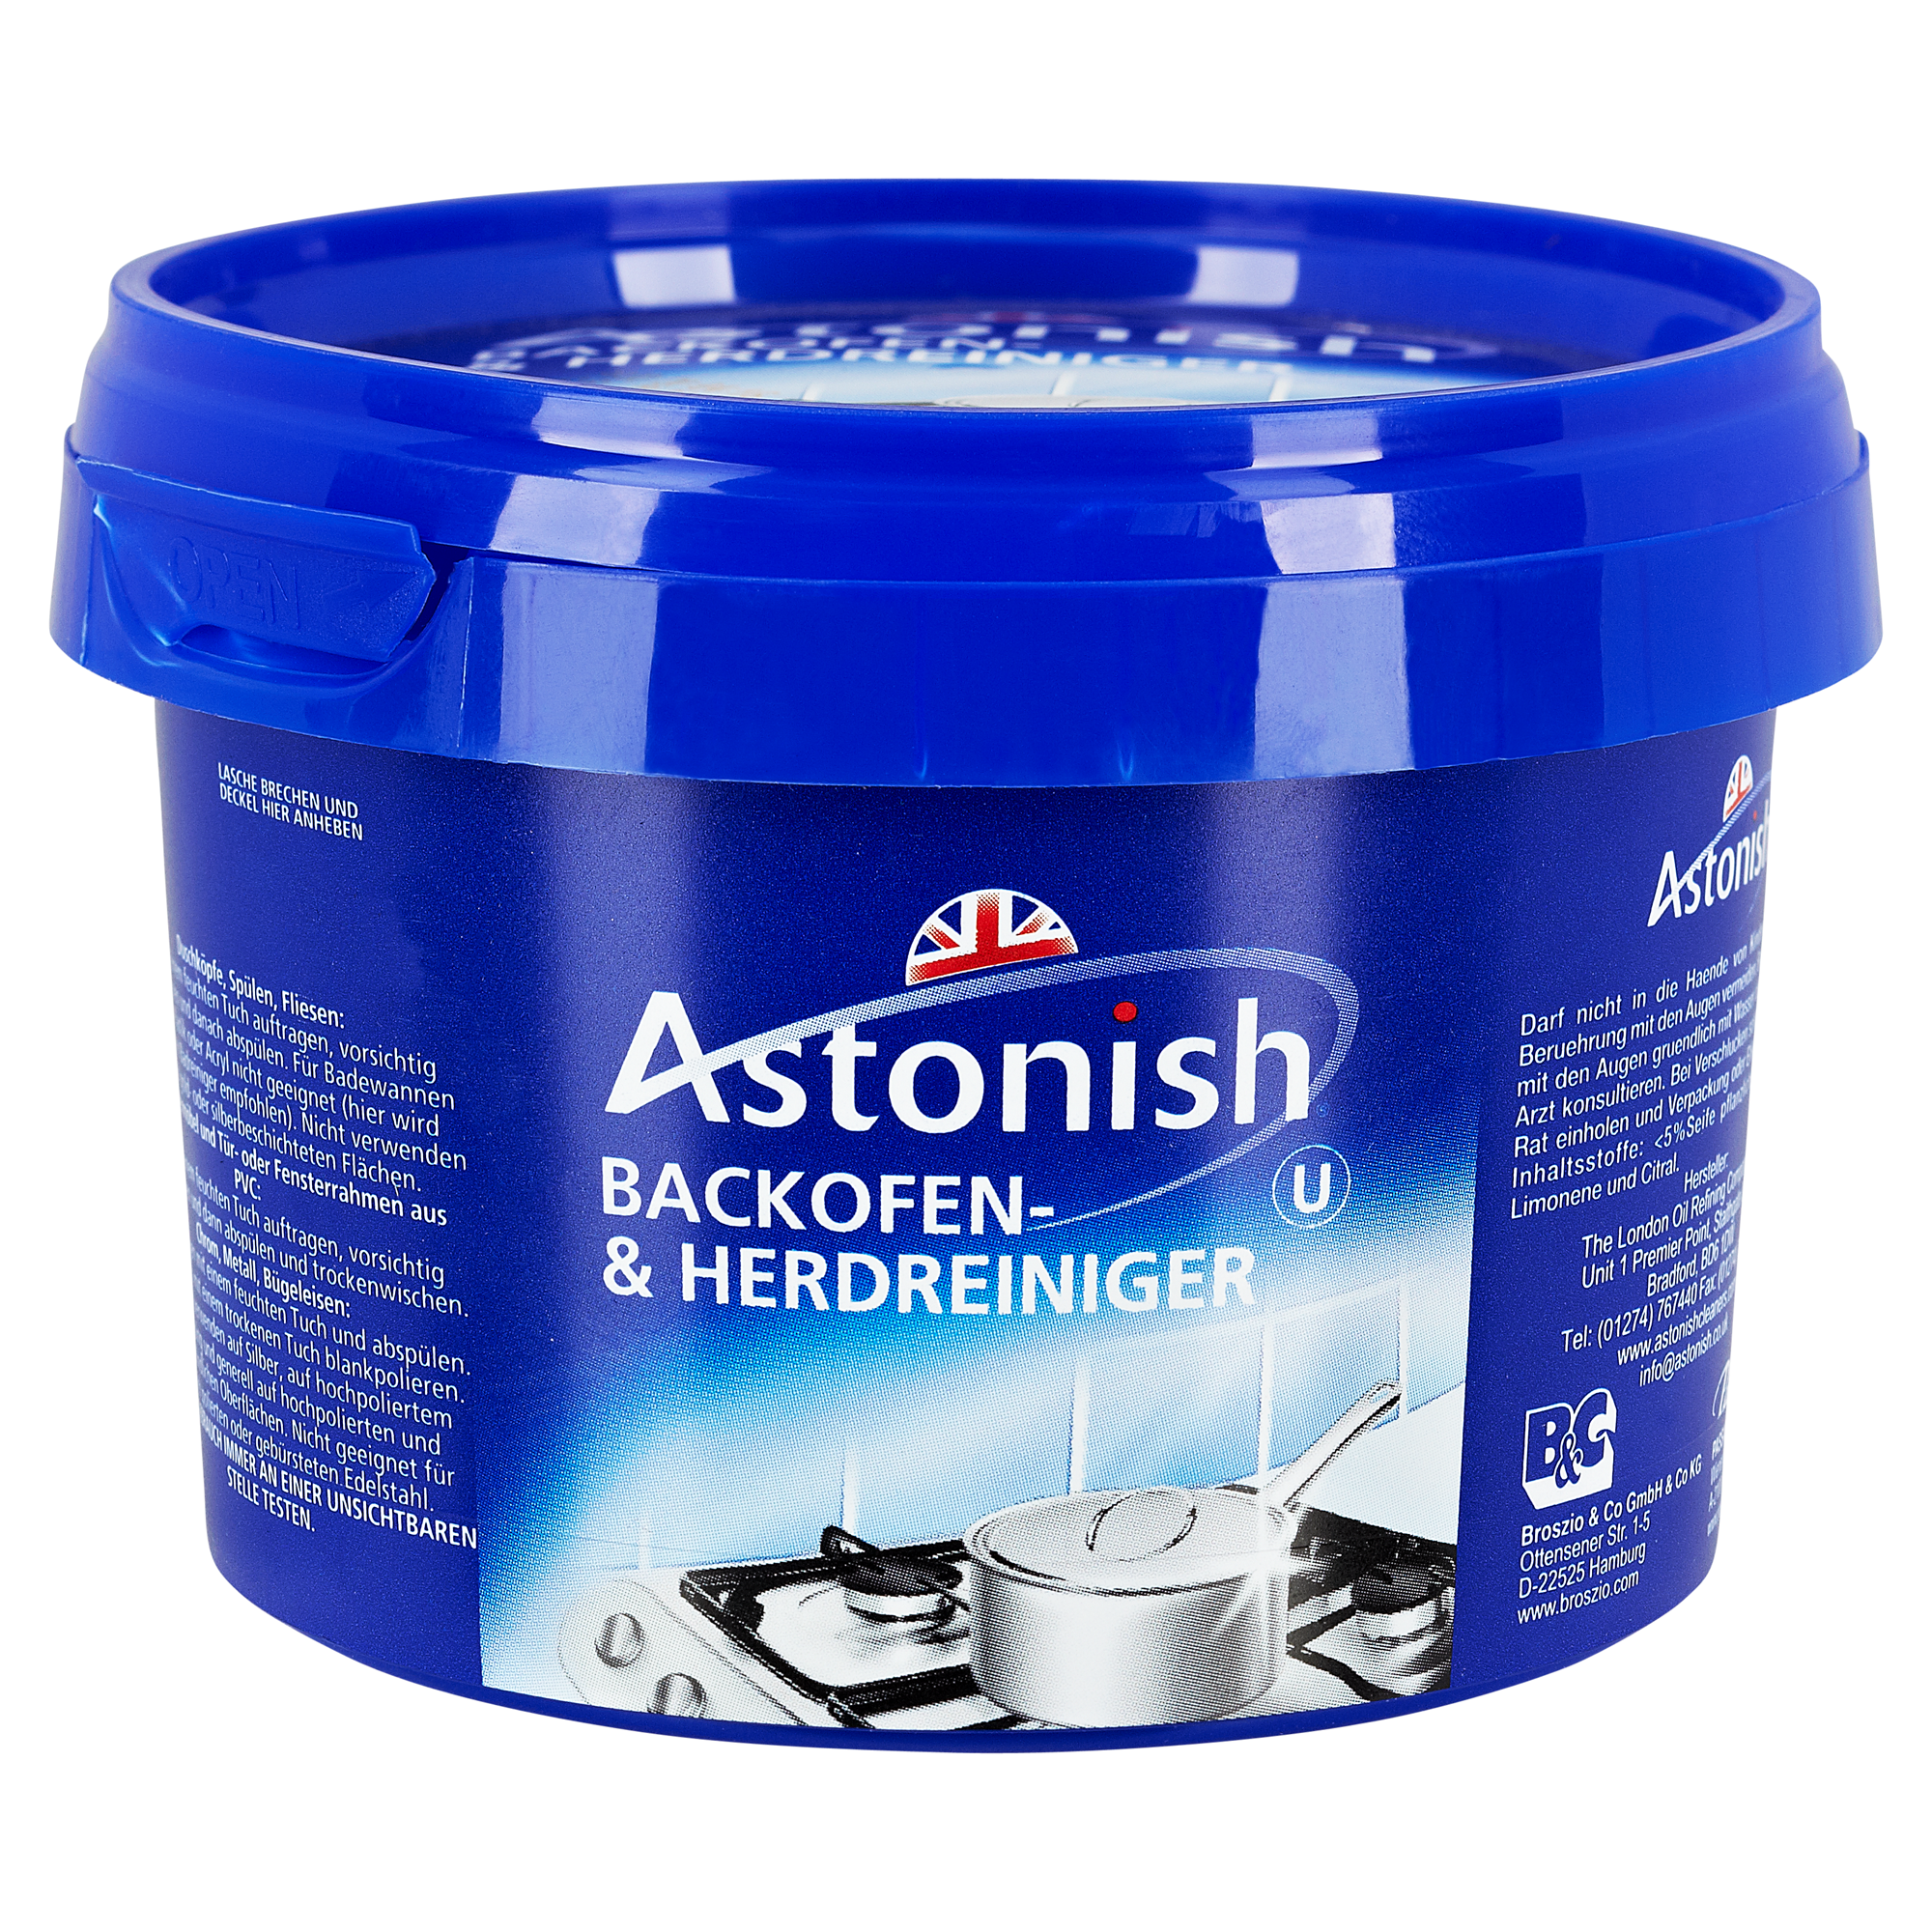 Astonish Backofen- & Herdreiniger 400 g + product picture